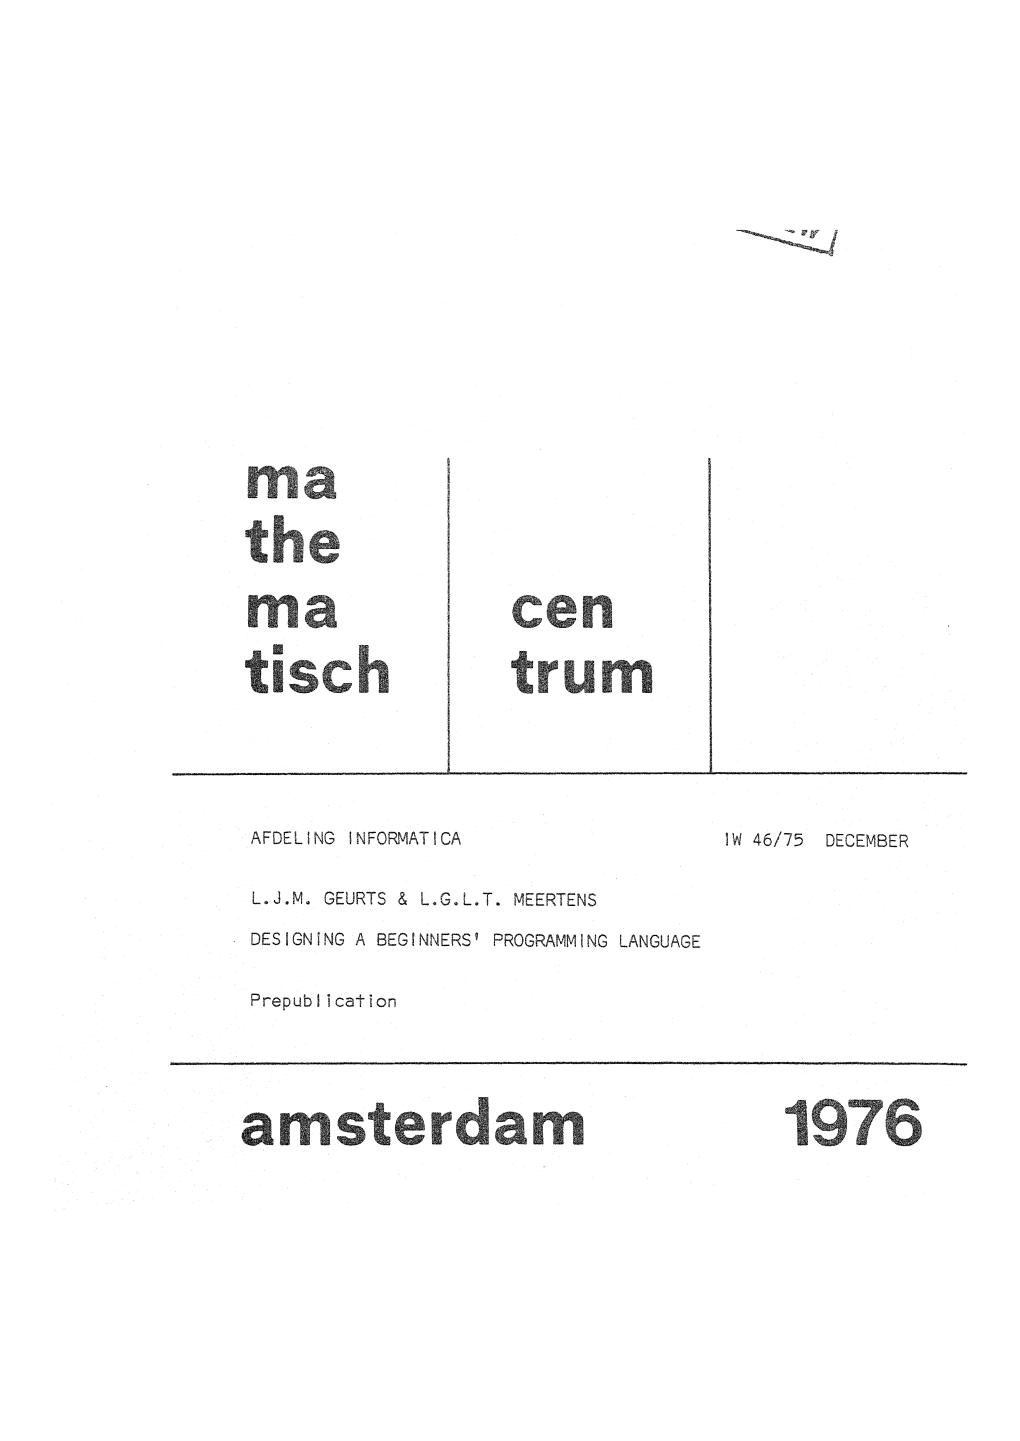 Ma the Ma Tisch Cen Trum Amsterdam